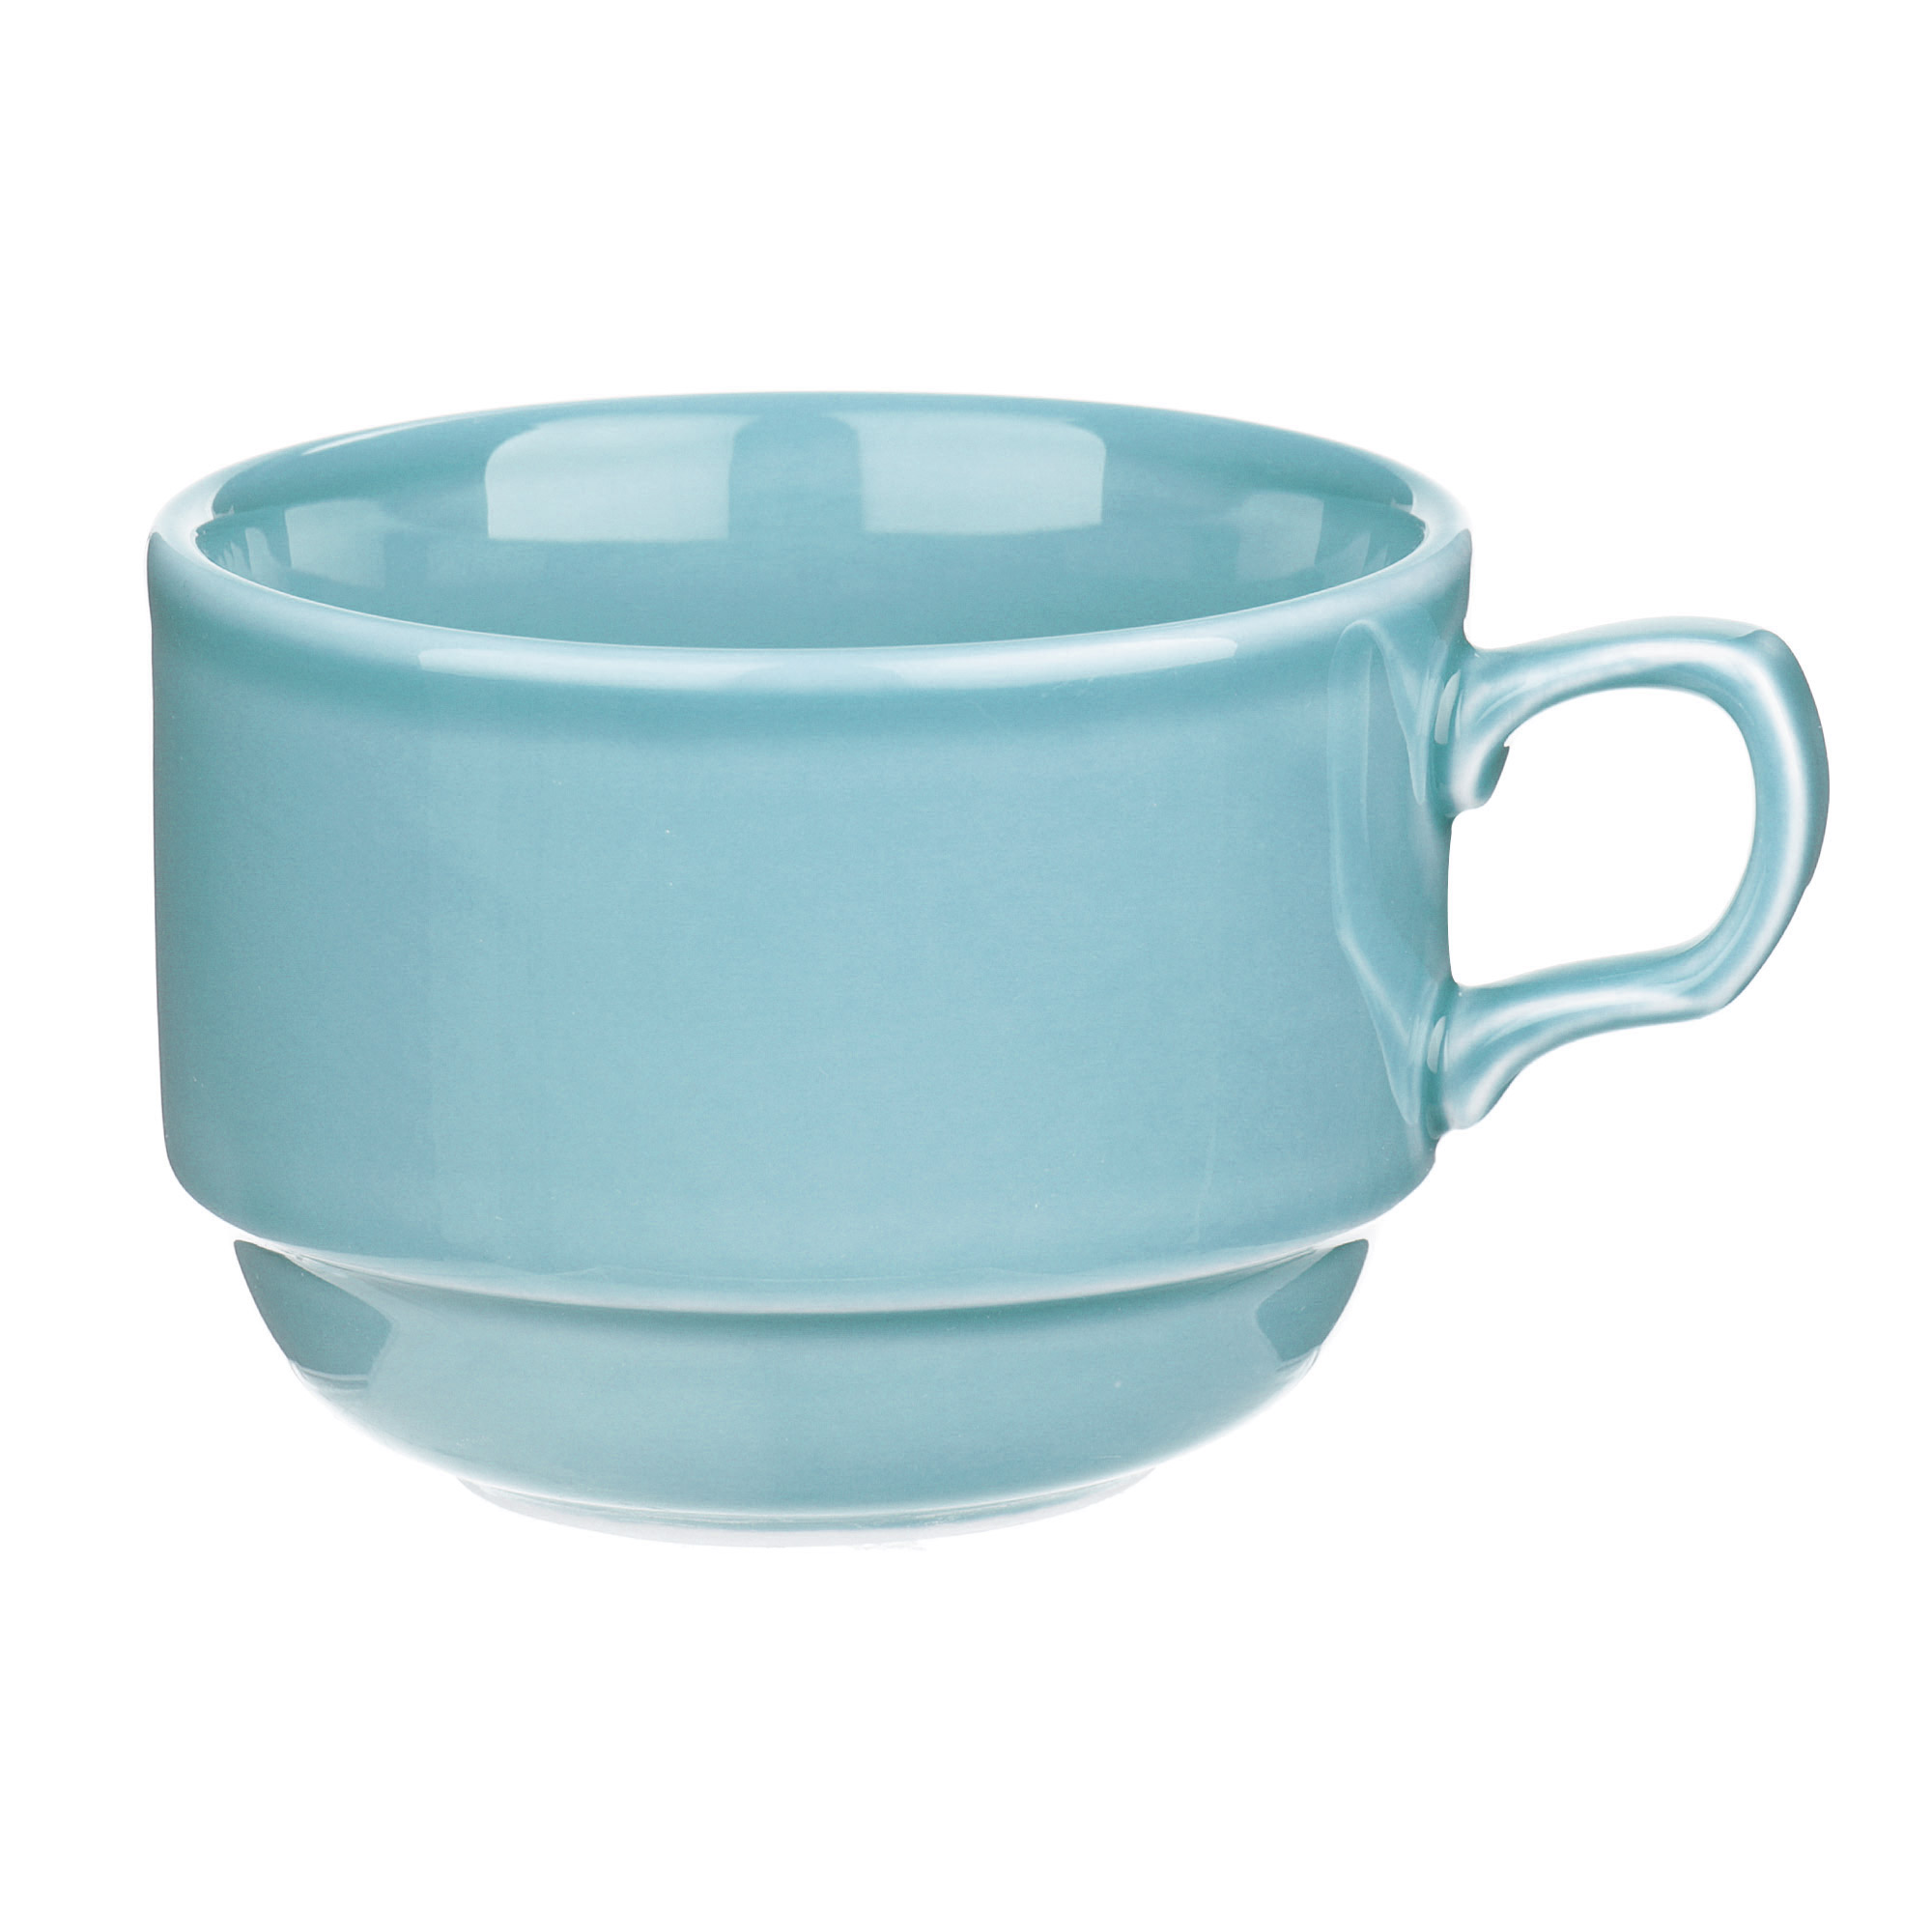 Чашка чайная Башкирский фарфор Браво 250 мл голубой чашка чайная башкирский фарфор браво светло голубая 250 мл